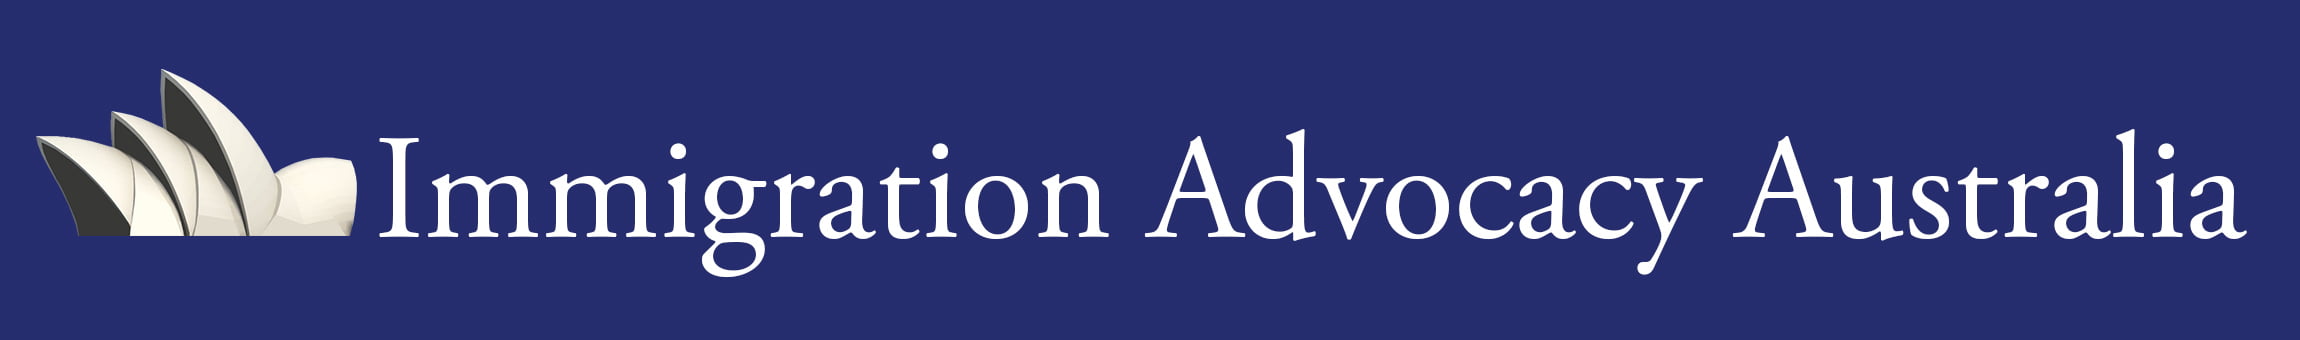 Immigration Advocacy Australia Logo